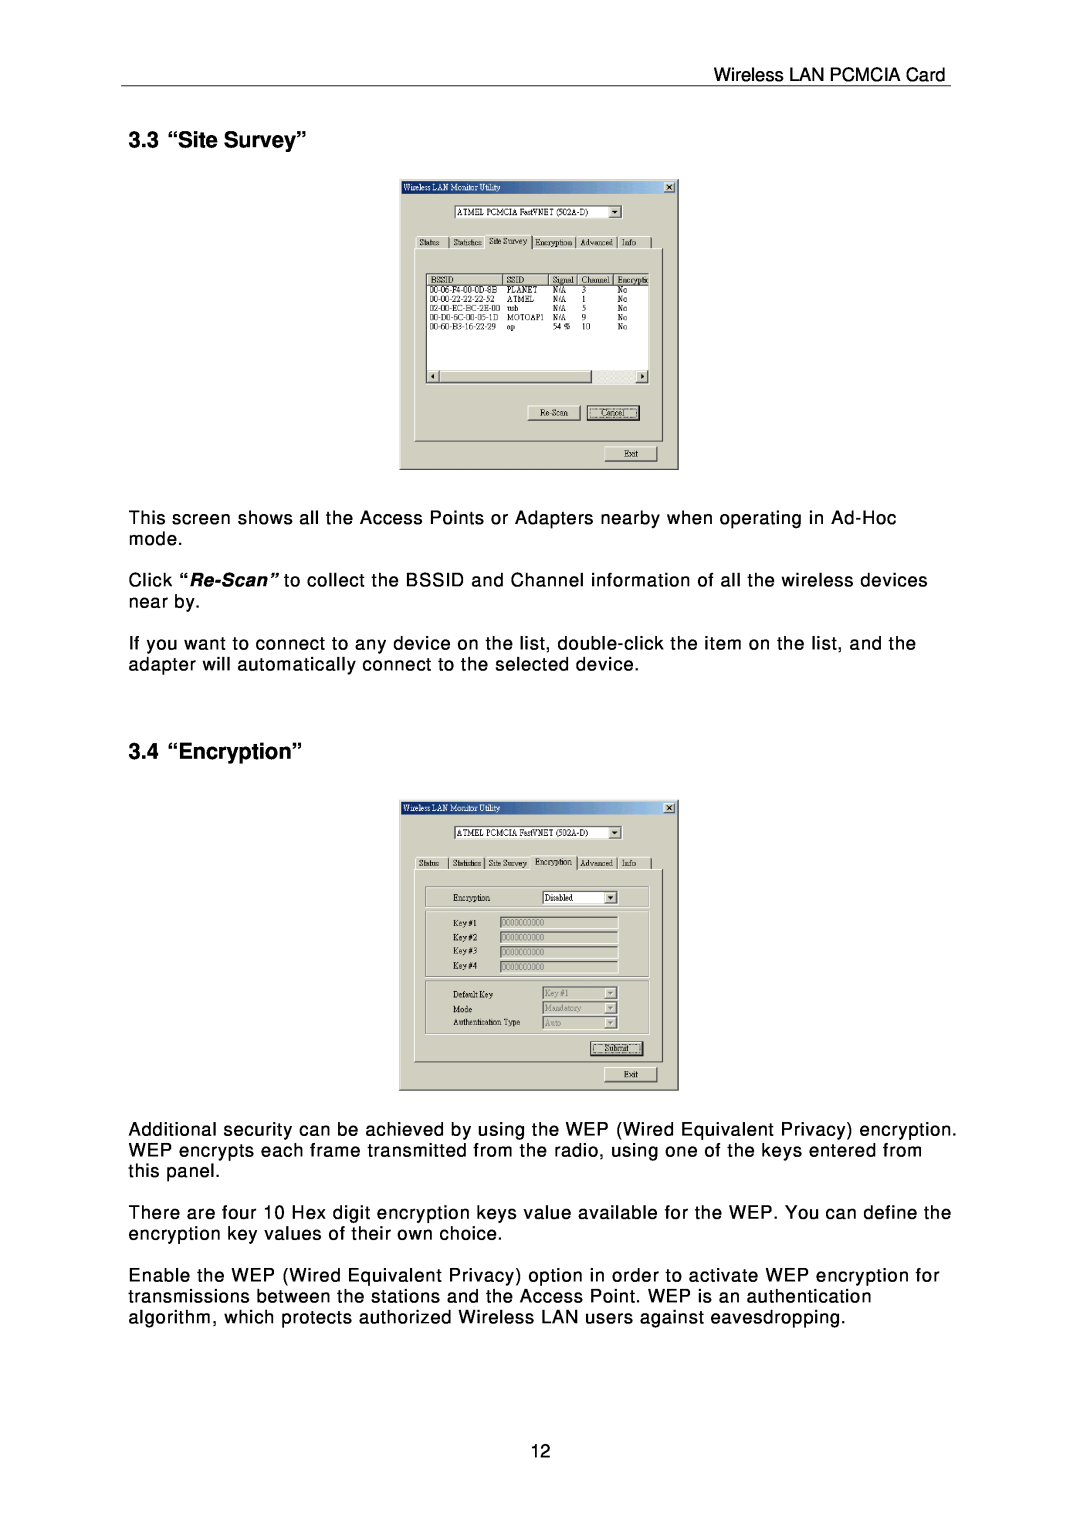 IBM PCMCIA Card user manual 3.3 “Site Survey”, 3.4 “Encryption” 